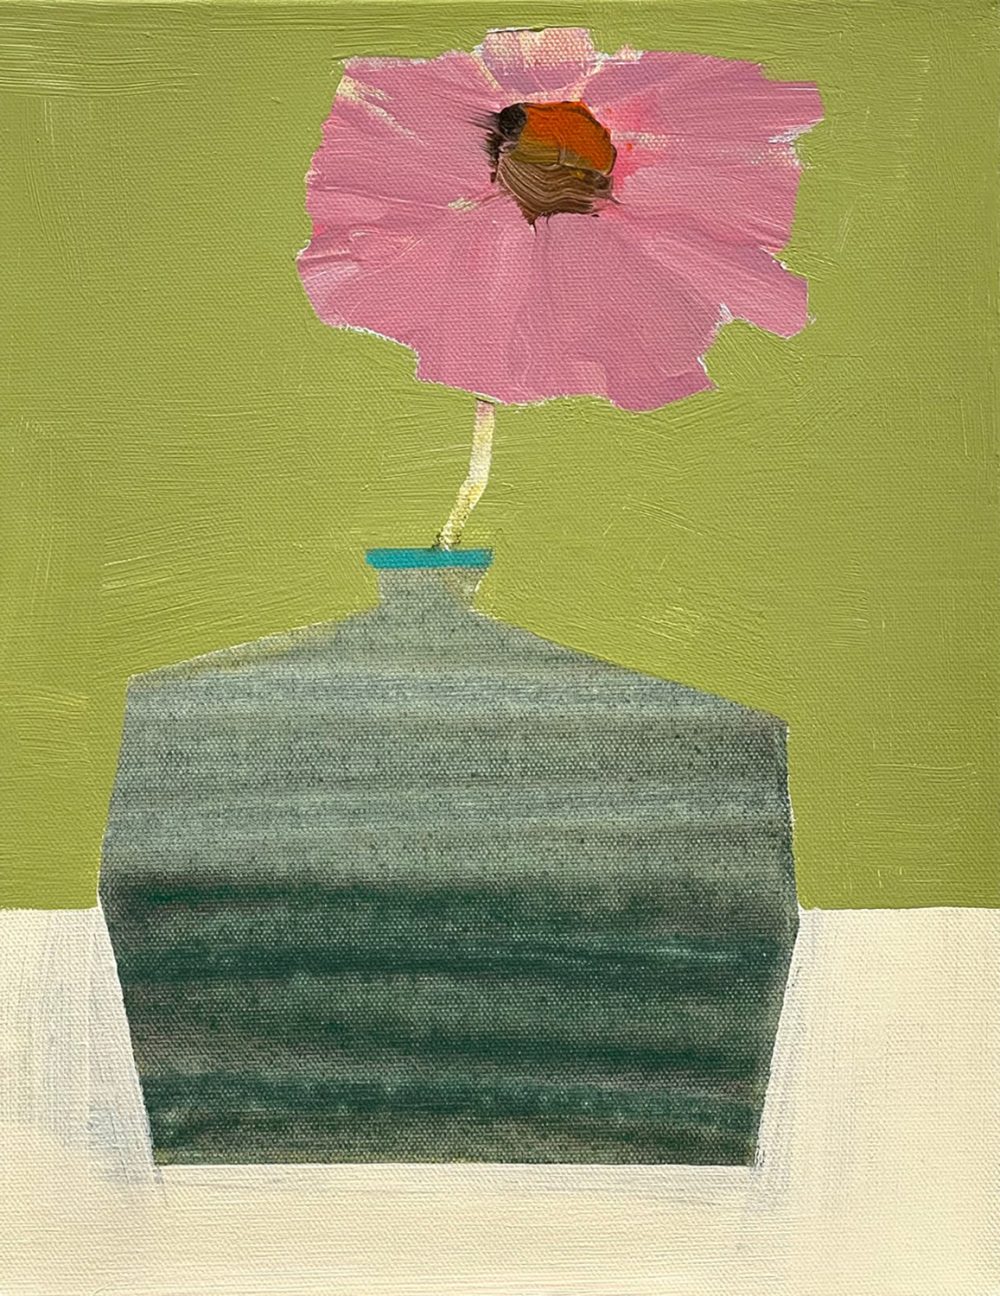 Ellen Rolli - Two Toned Vessel with Cone flower